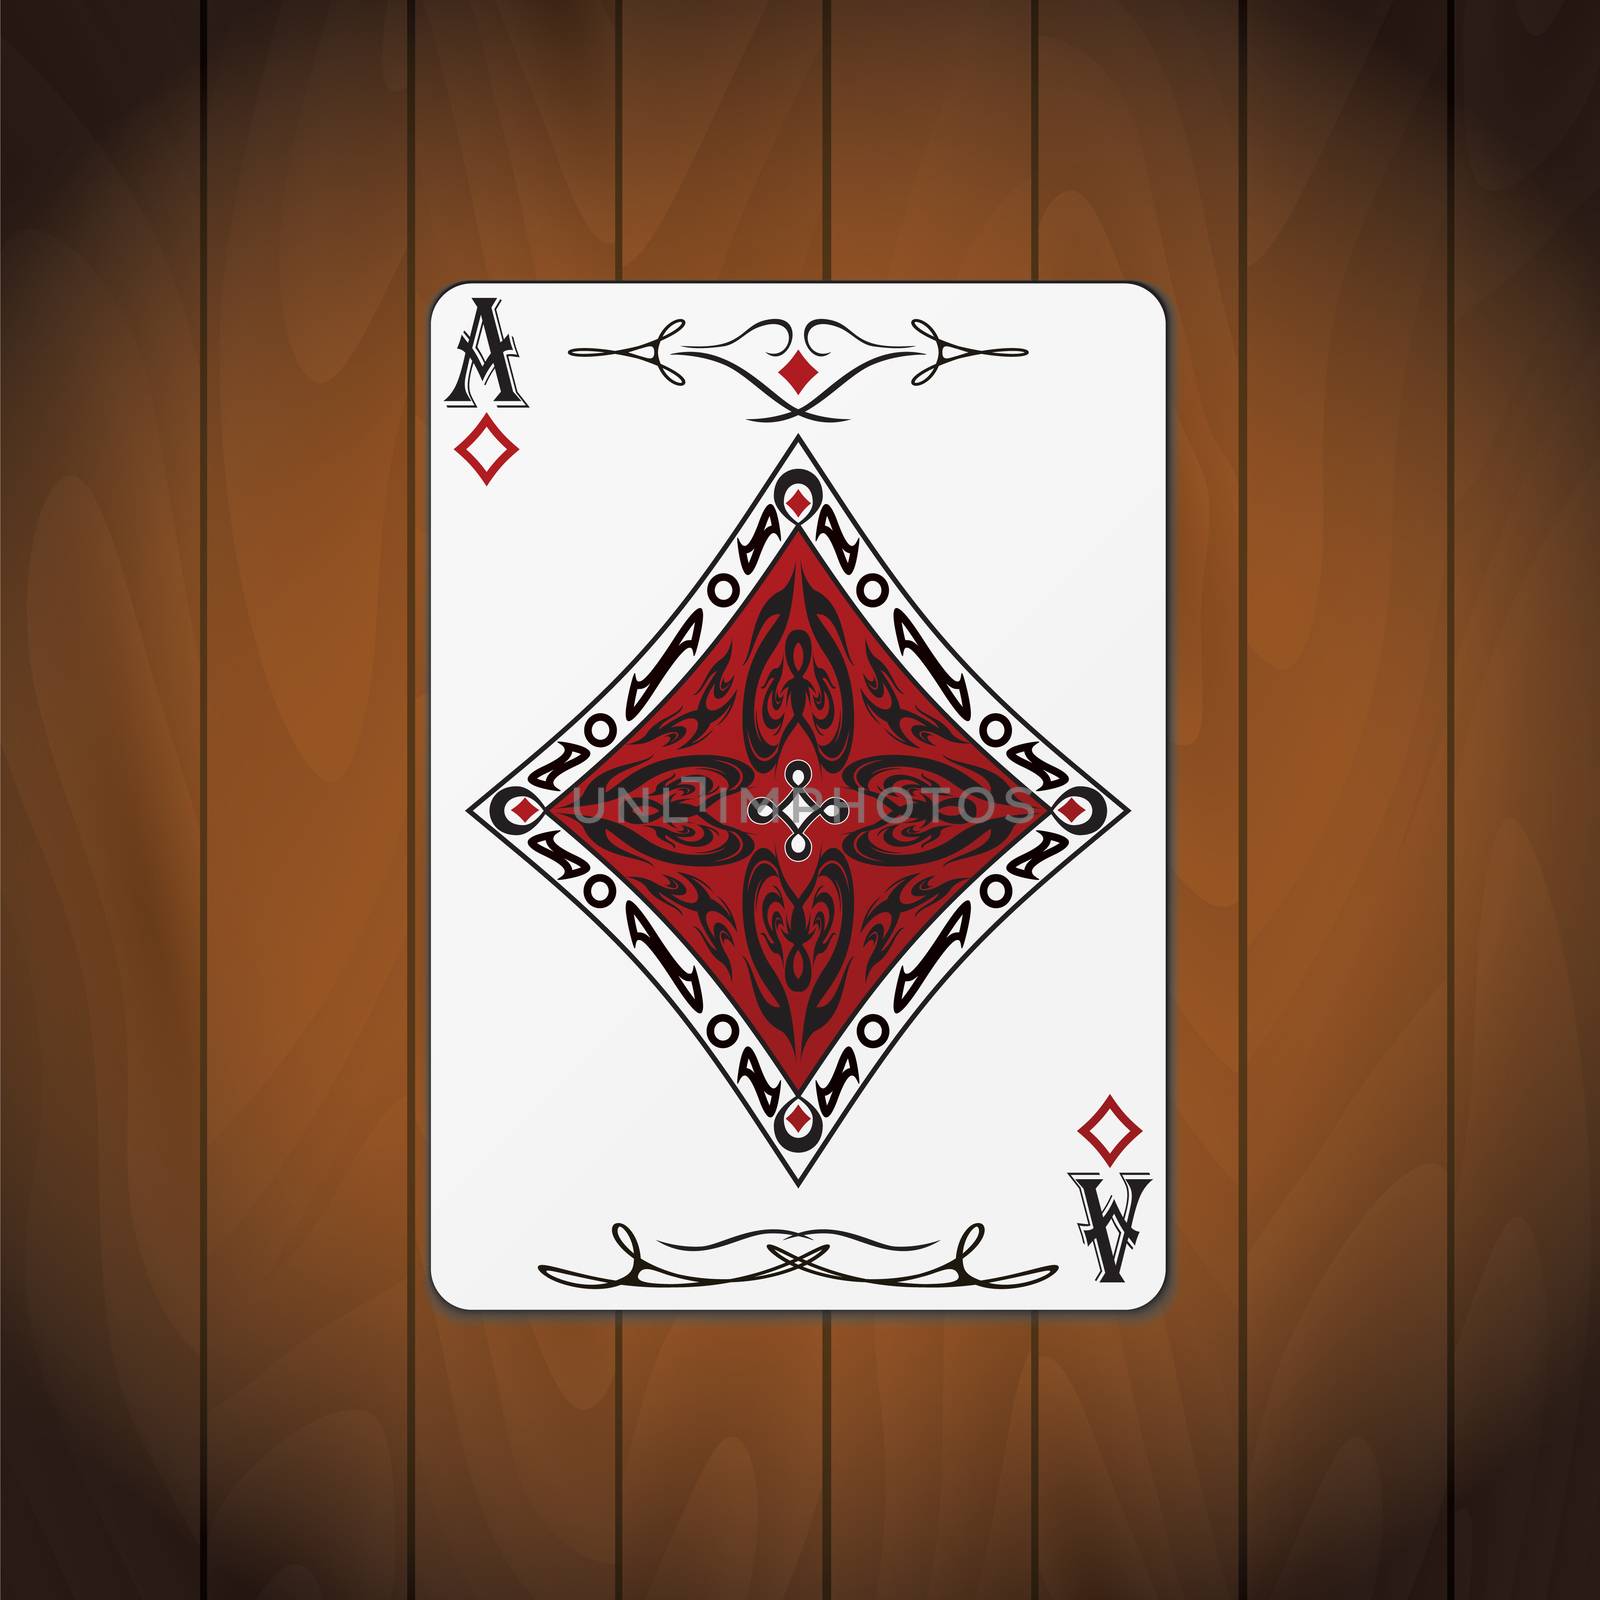 Ace of diamonds, poker card varnished wood background.